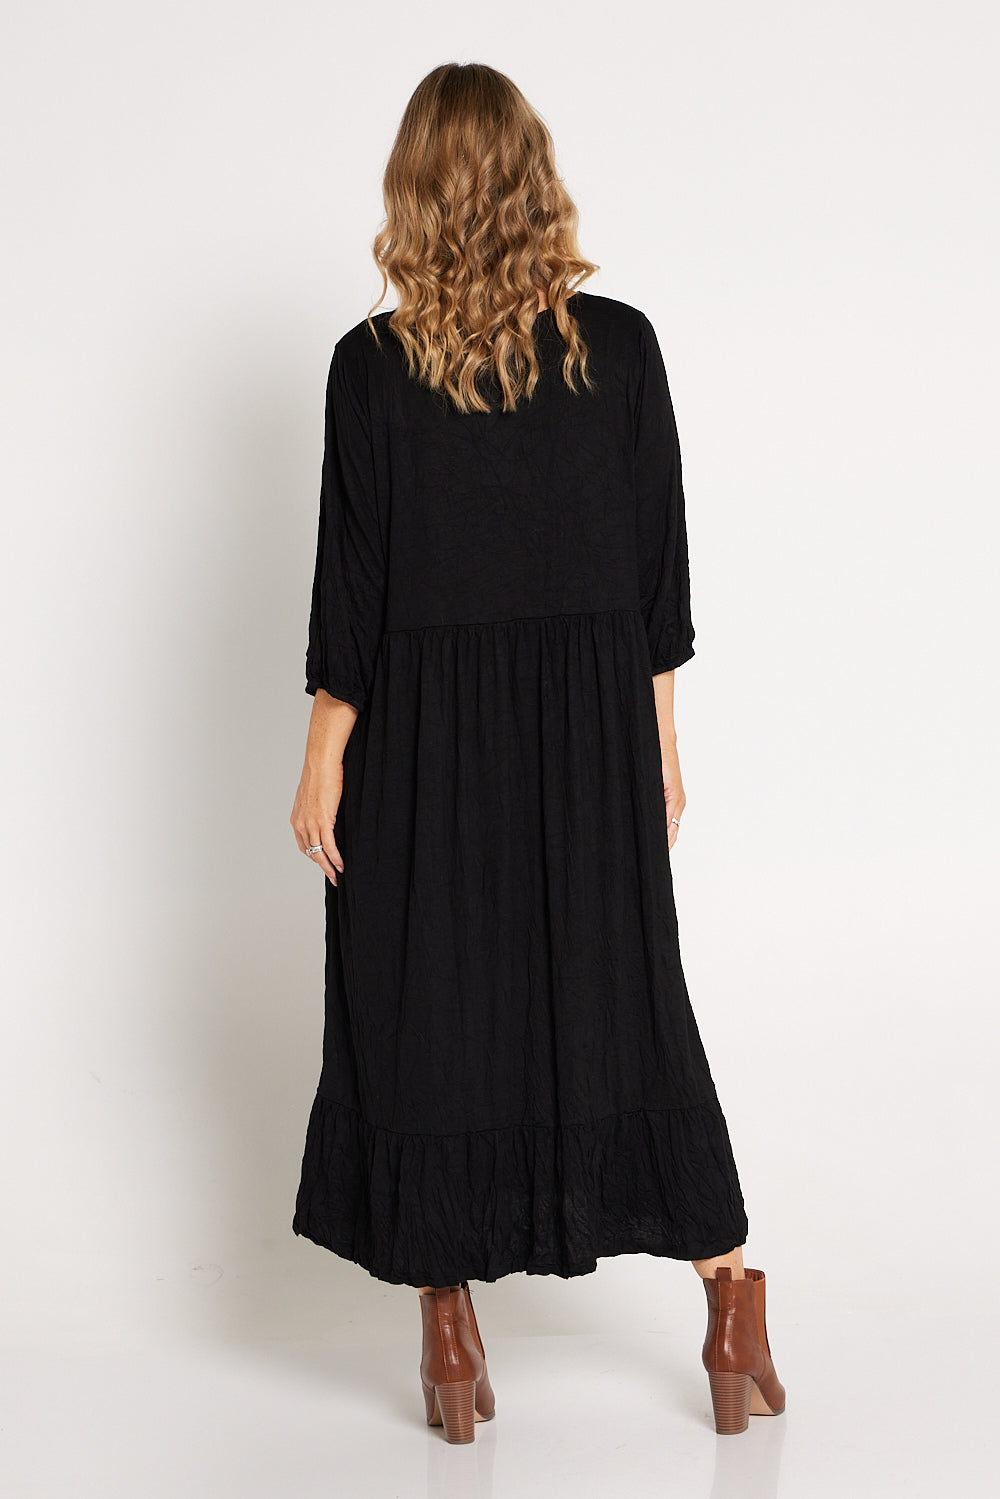 Leith Dress - Black